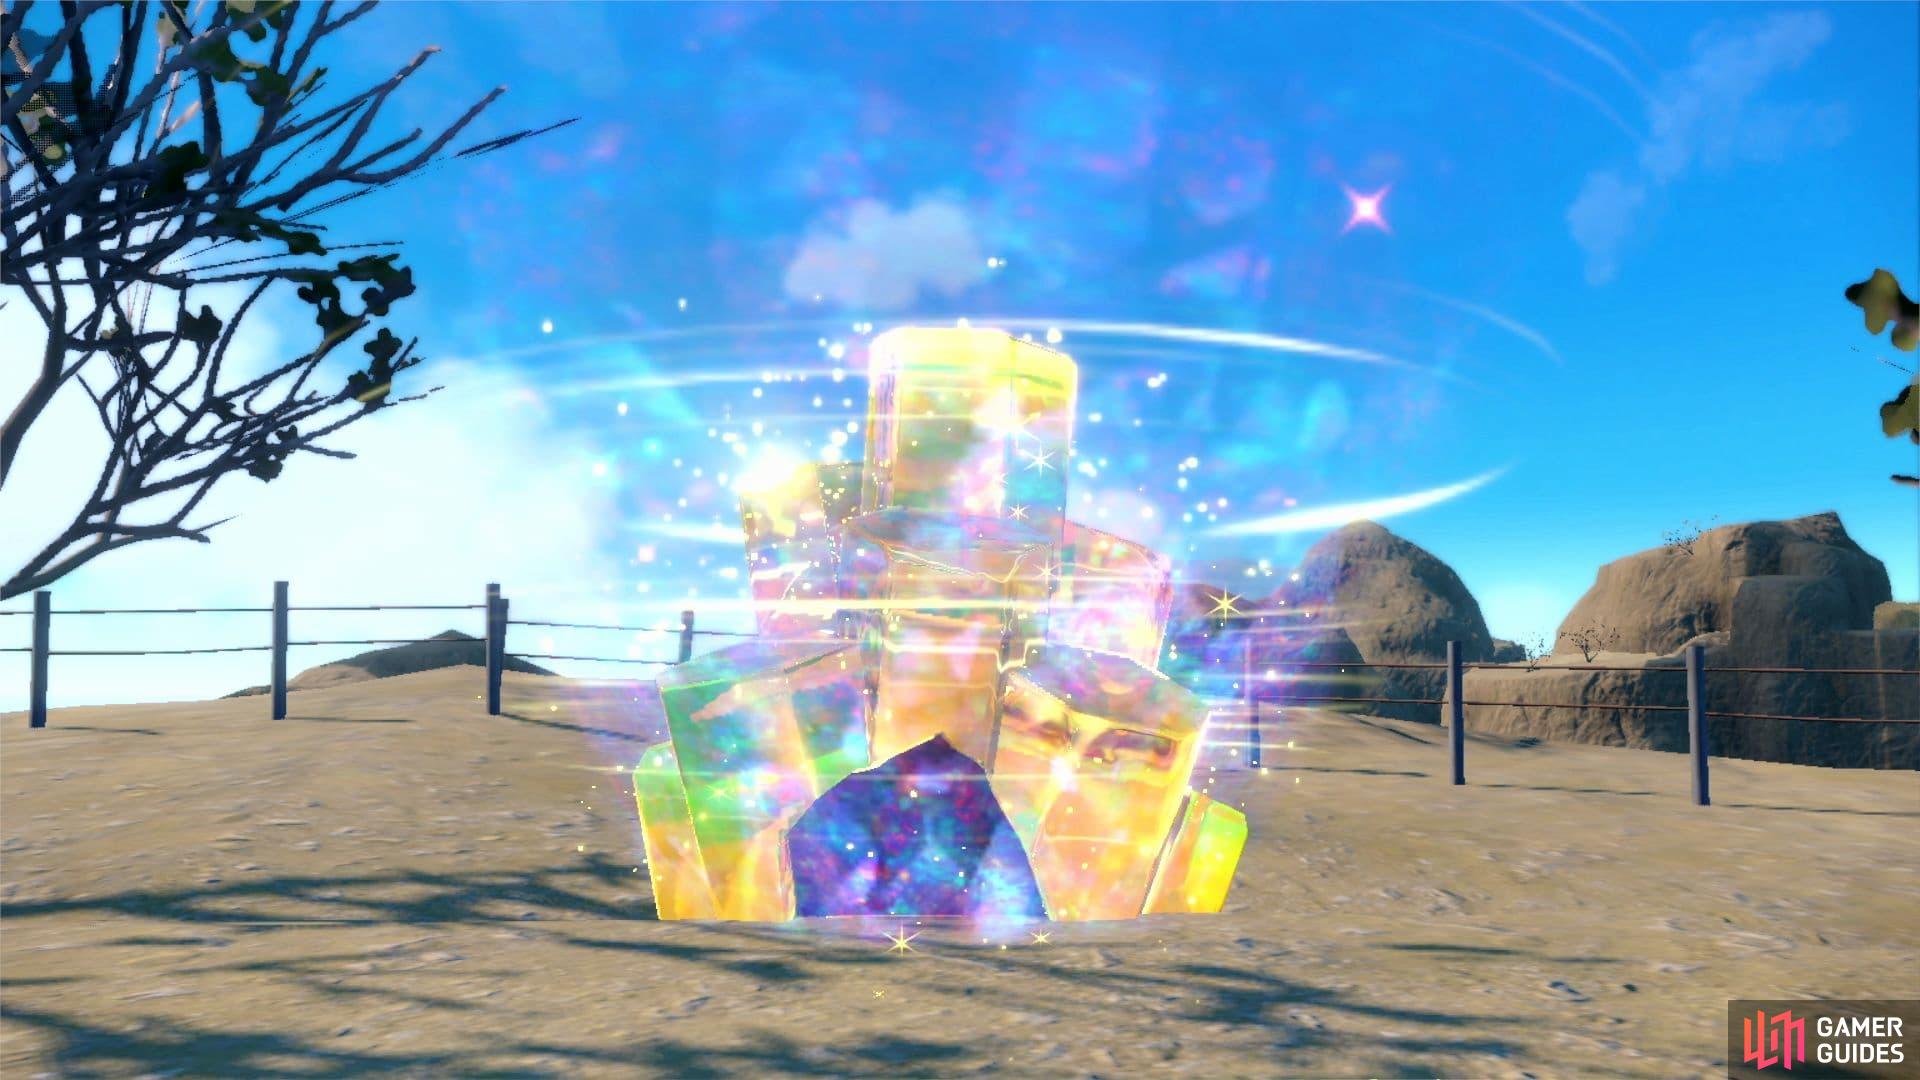 A Tera Raid crystal housing a battle event. (Credit: The Pokémon Company)